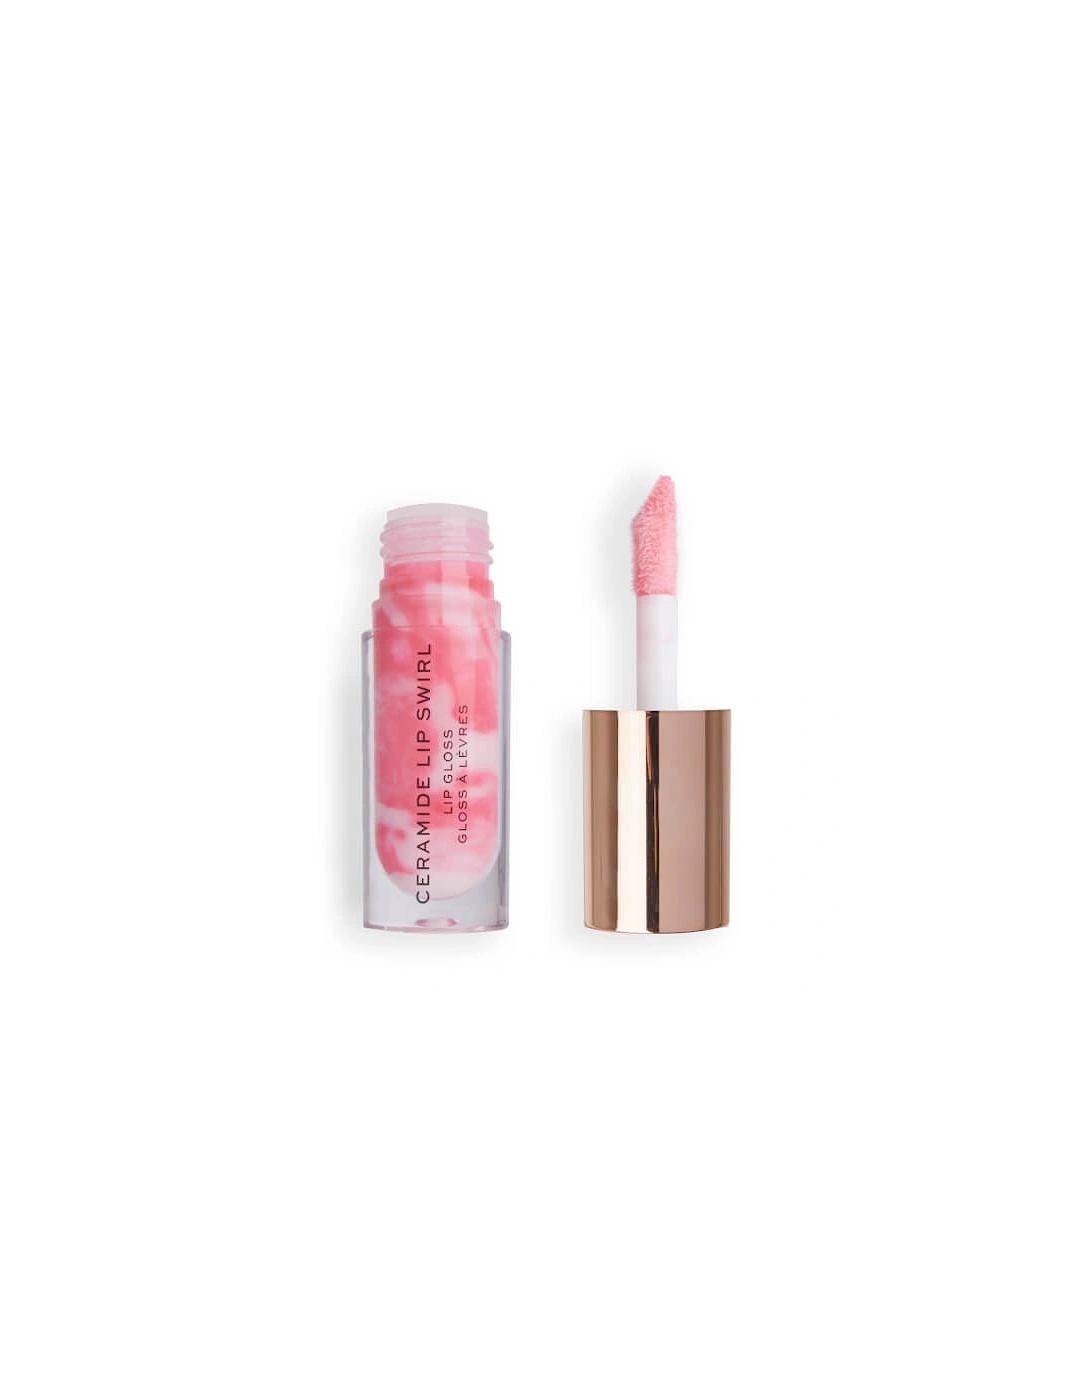 Makeup Lip Swirl Ceramide Gloss - Sweet Soft Pink, 2 of 1